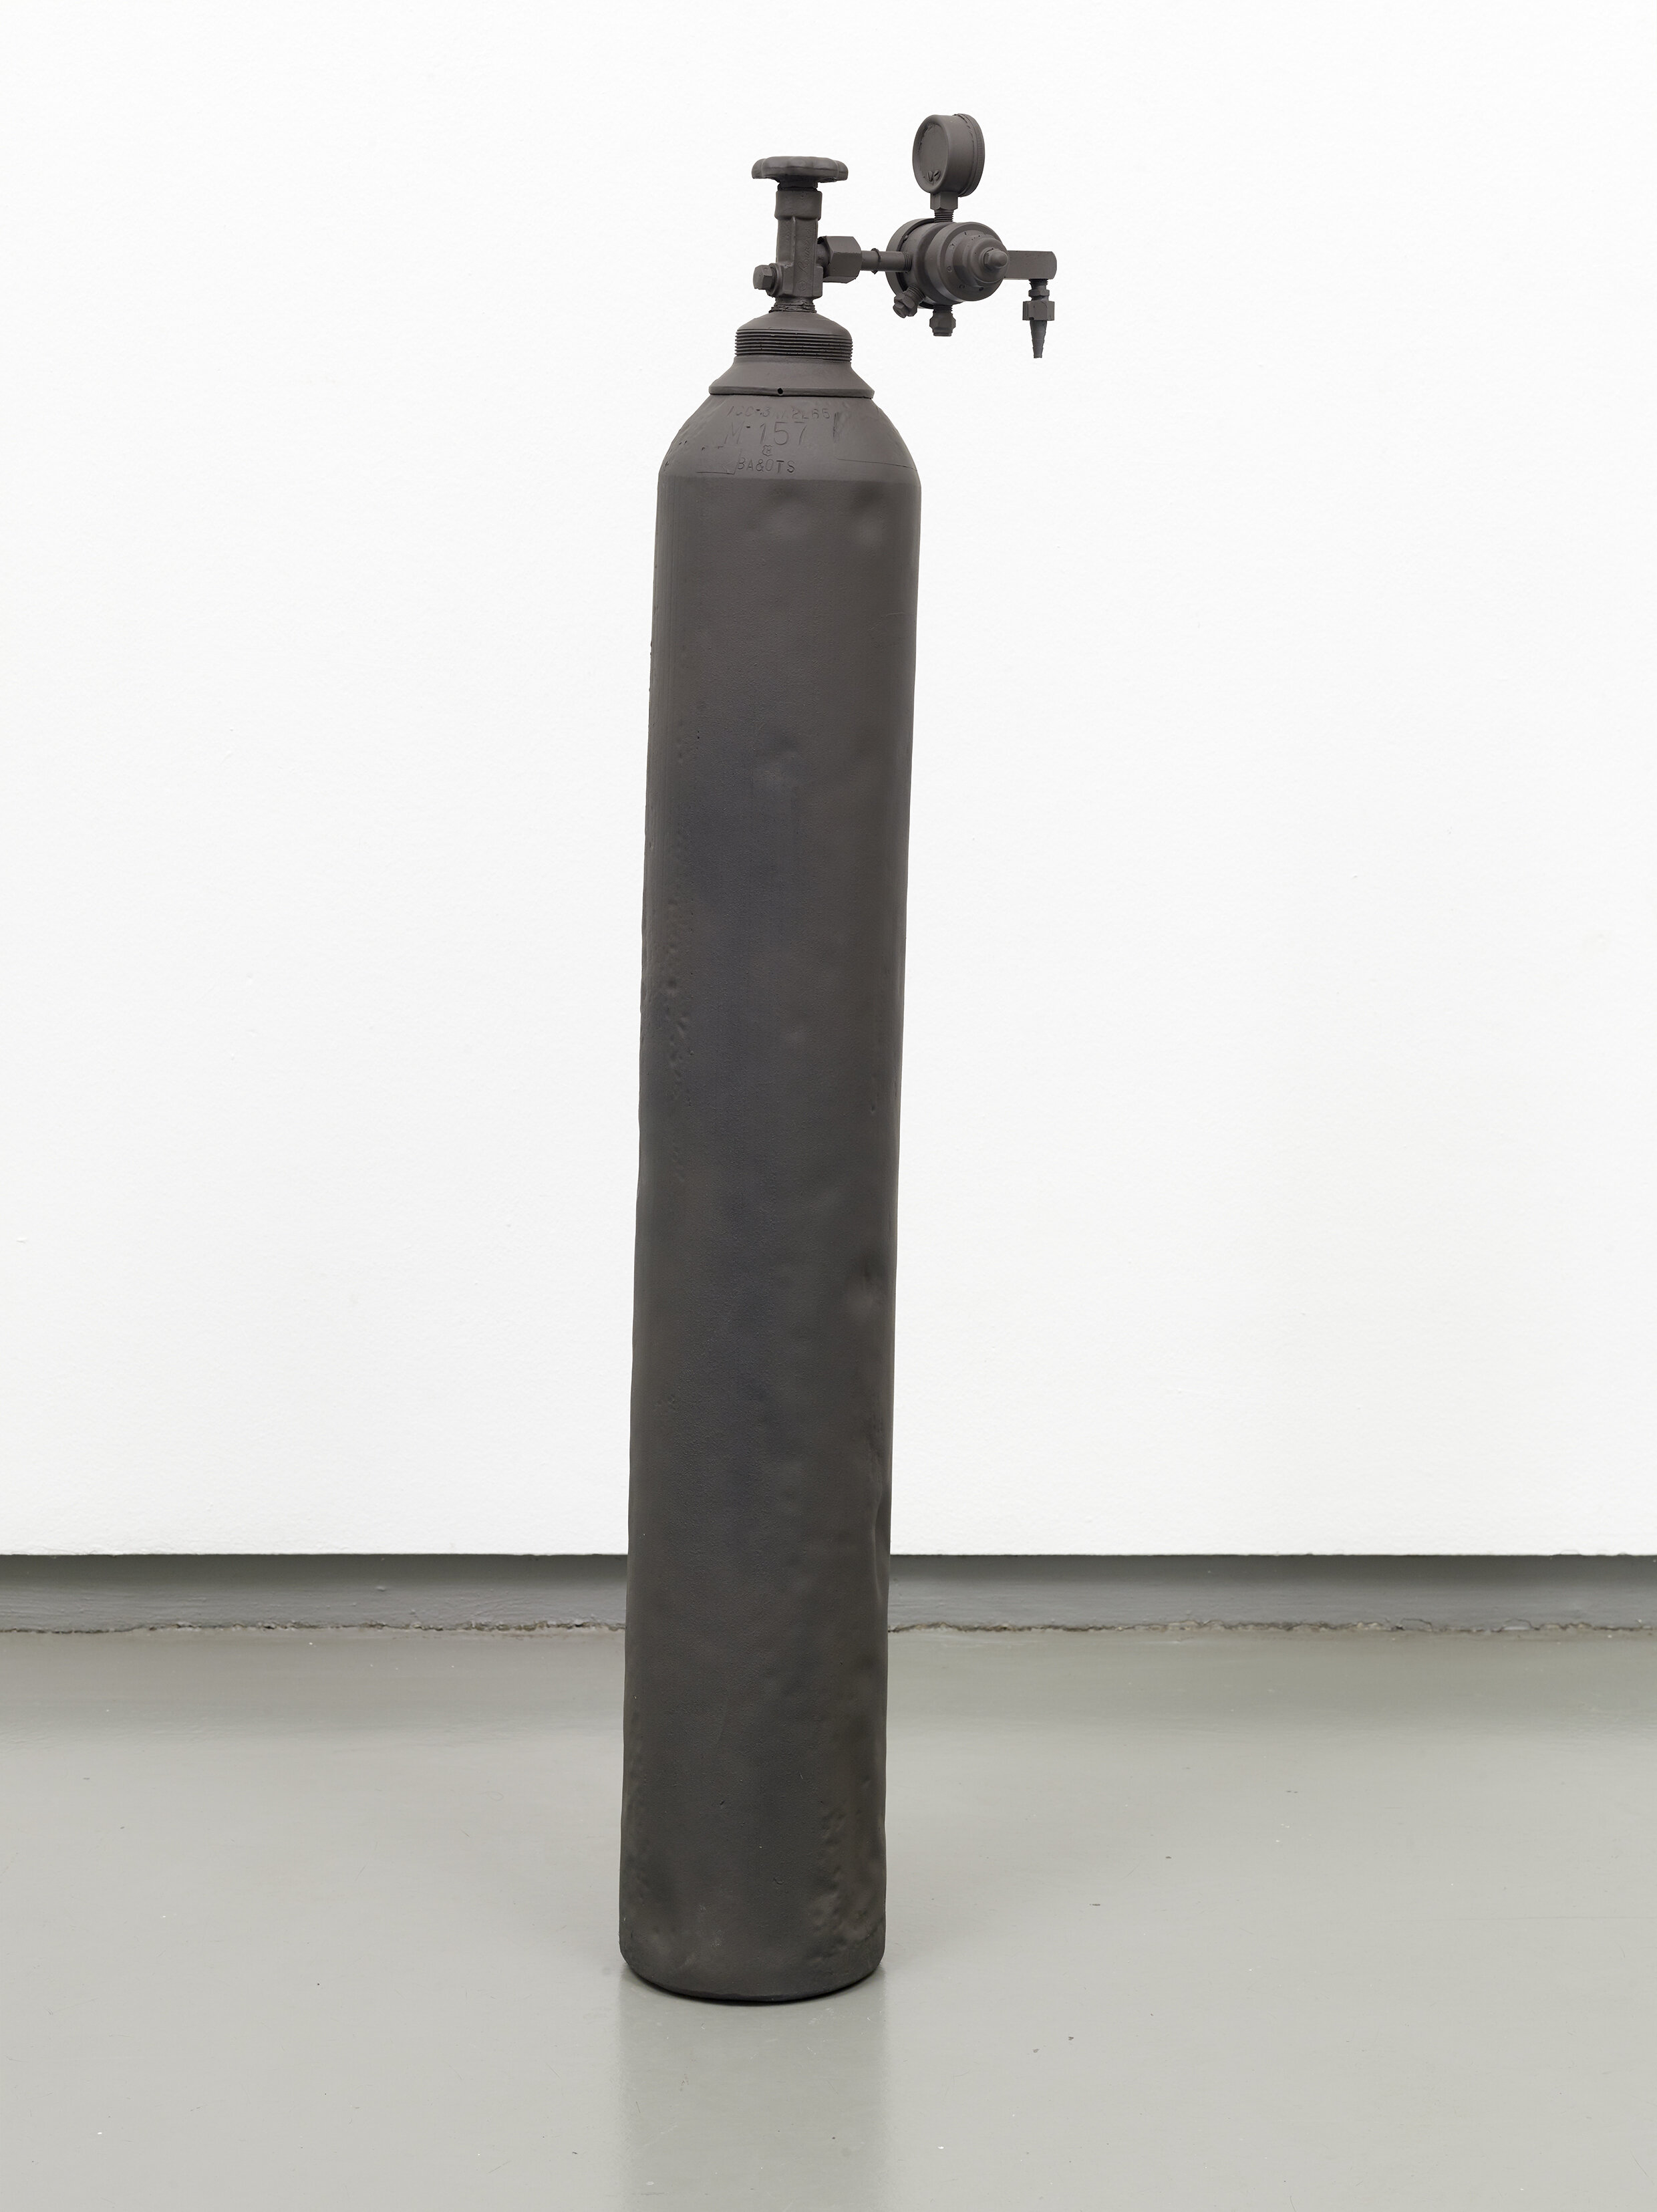  Untitled, 2015. Polyurethane and enamel. 50 x 21 x 7 inches 